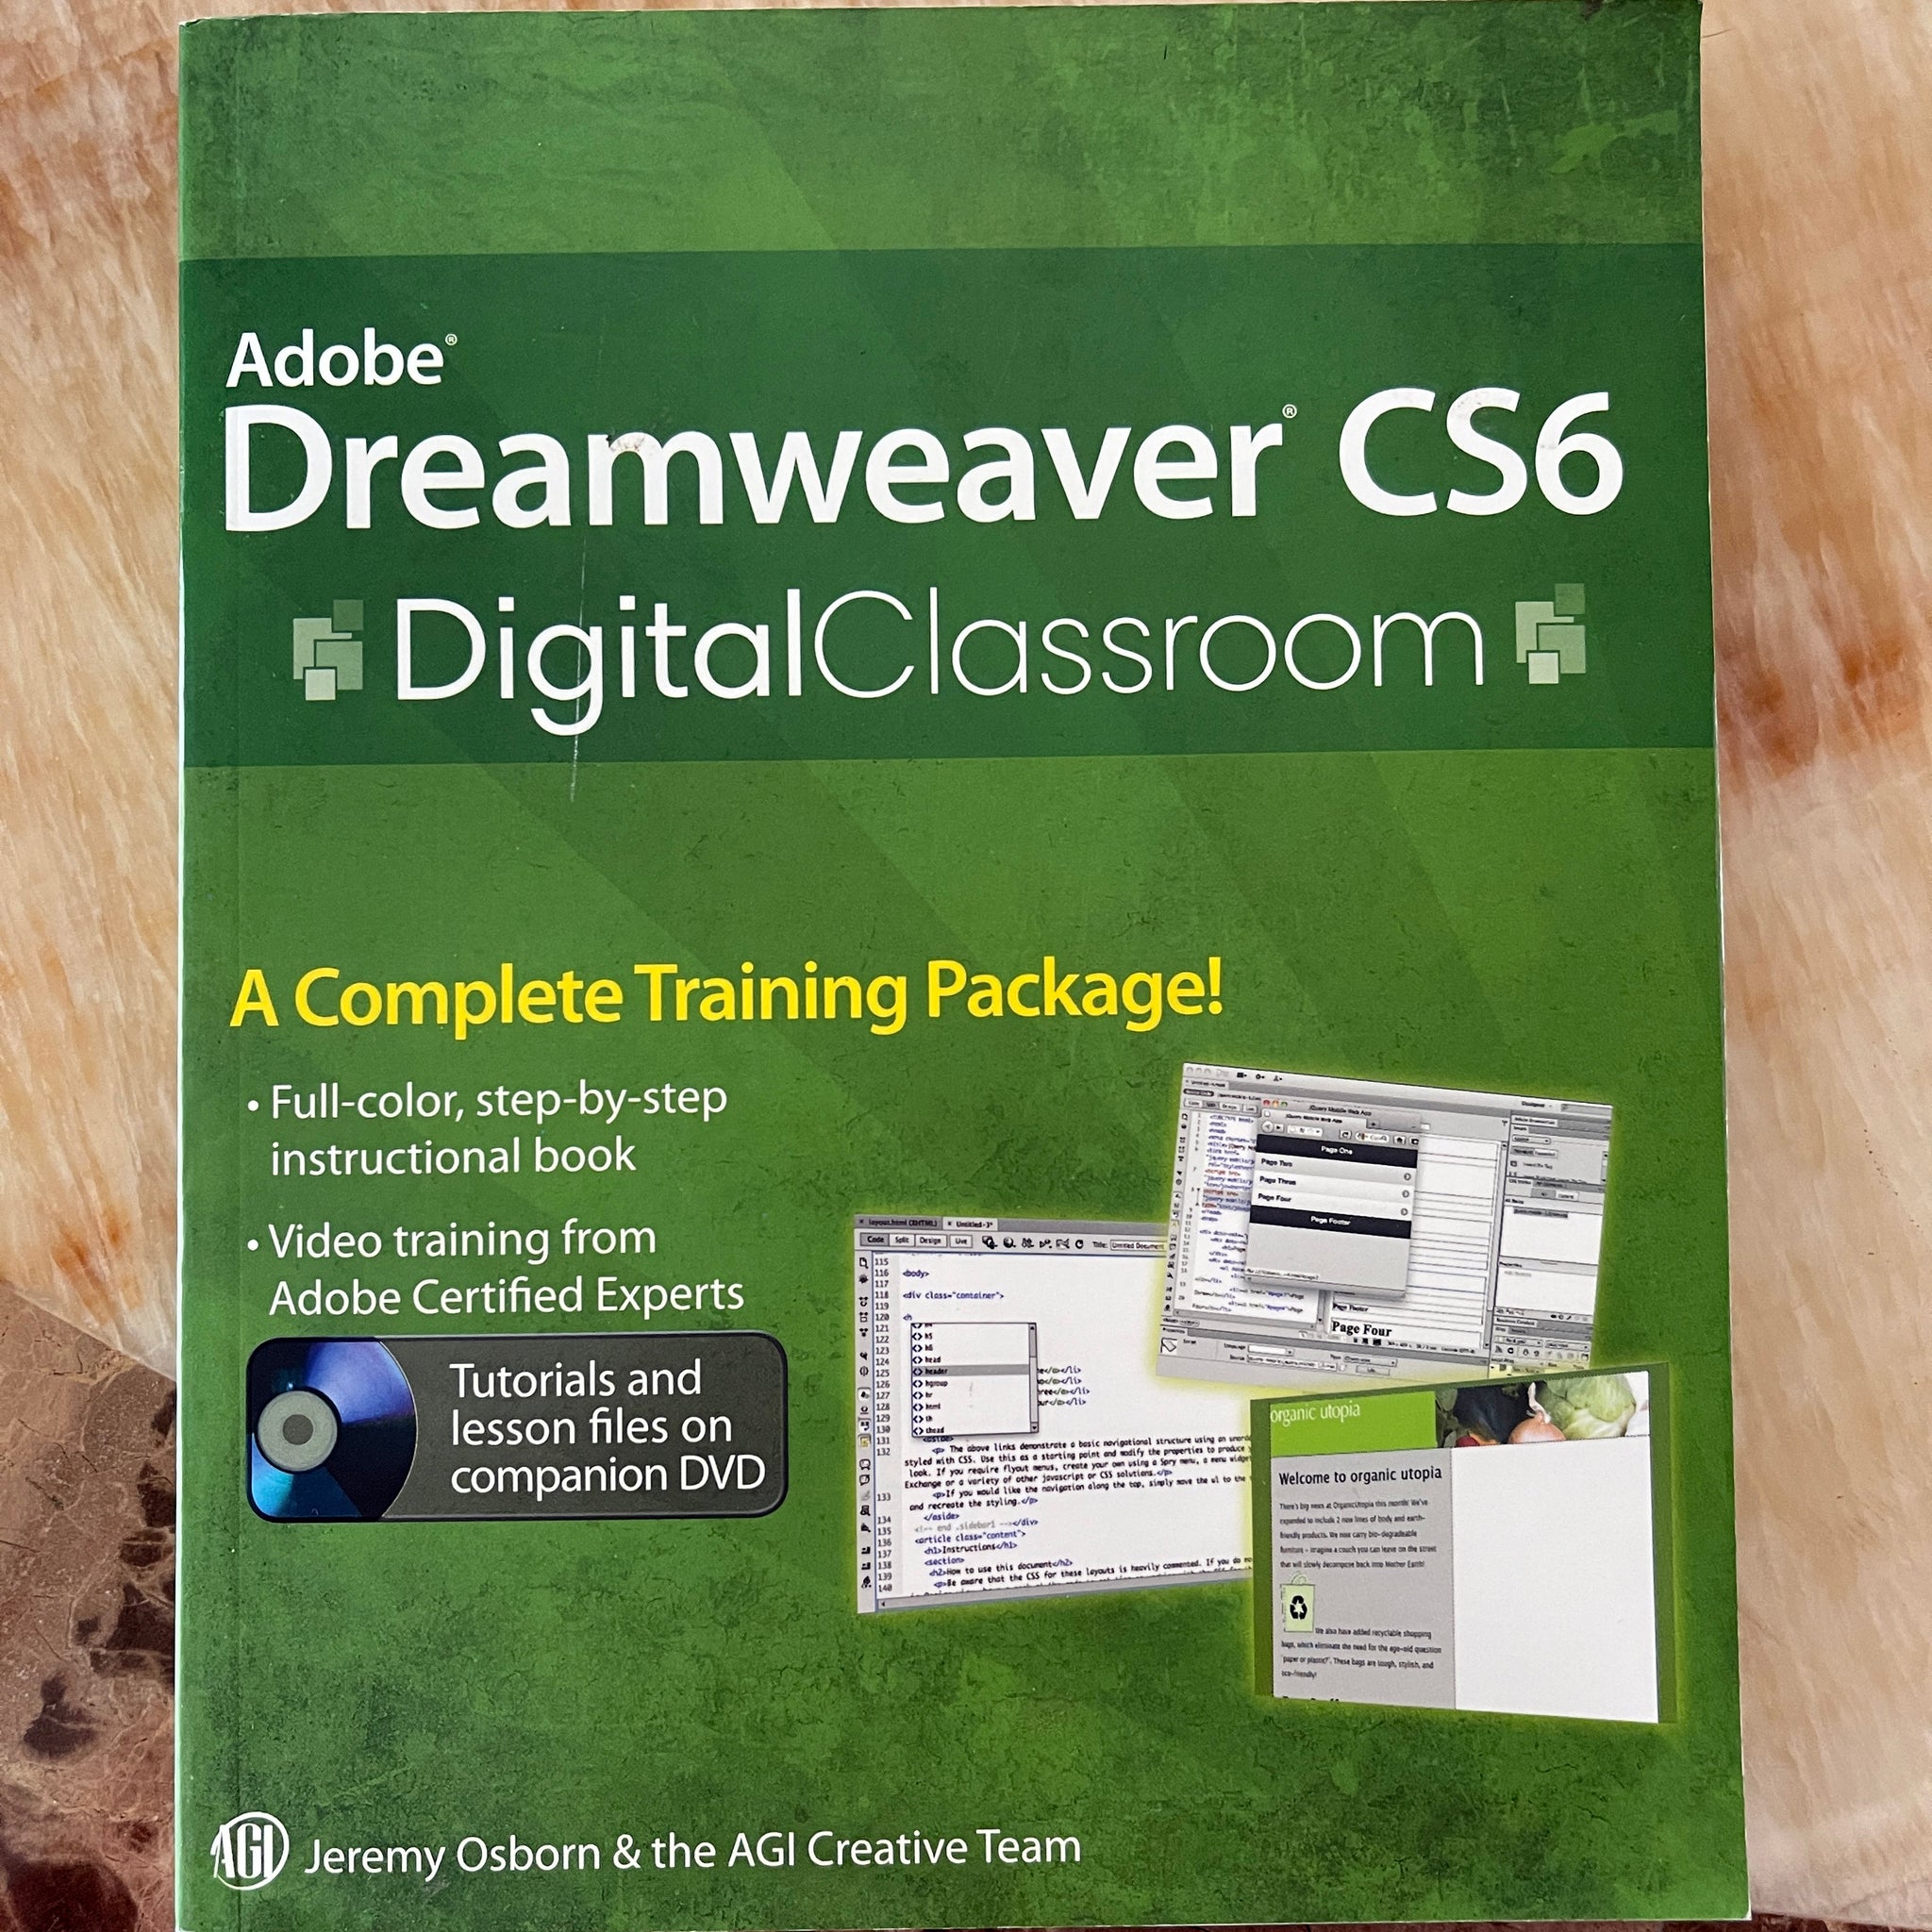 Adobe Dreamweaver CS6, Digital Classroom, A Complete Training Package + CD